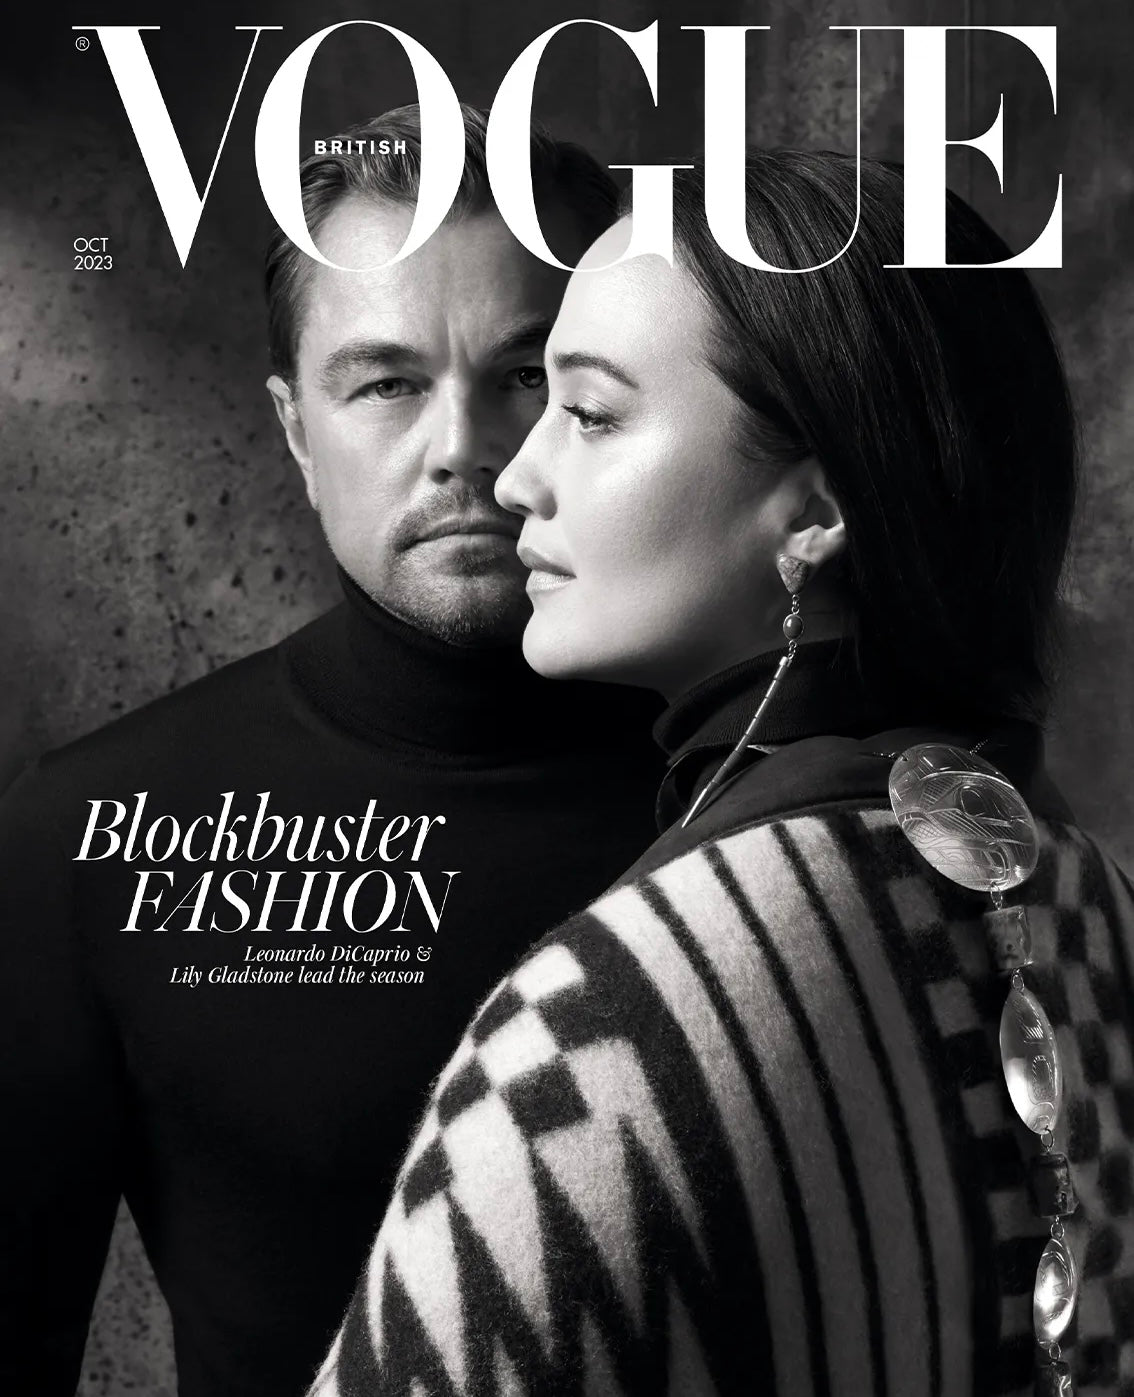 The Best Space-Inspired Fashion, British Vogue